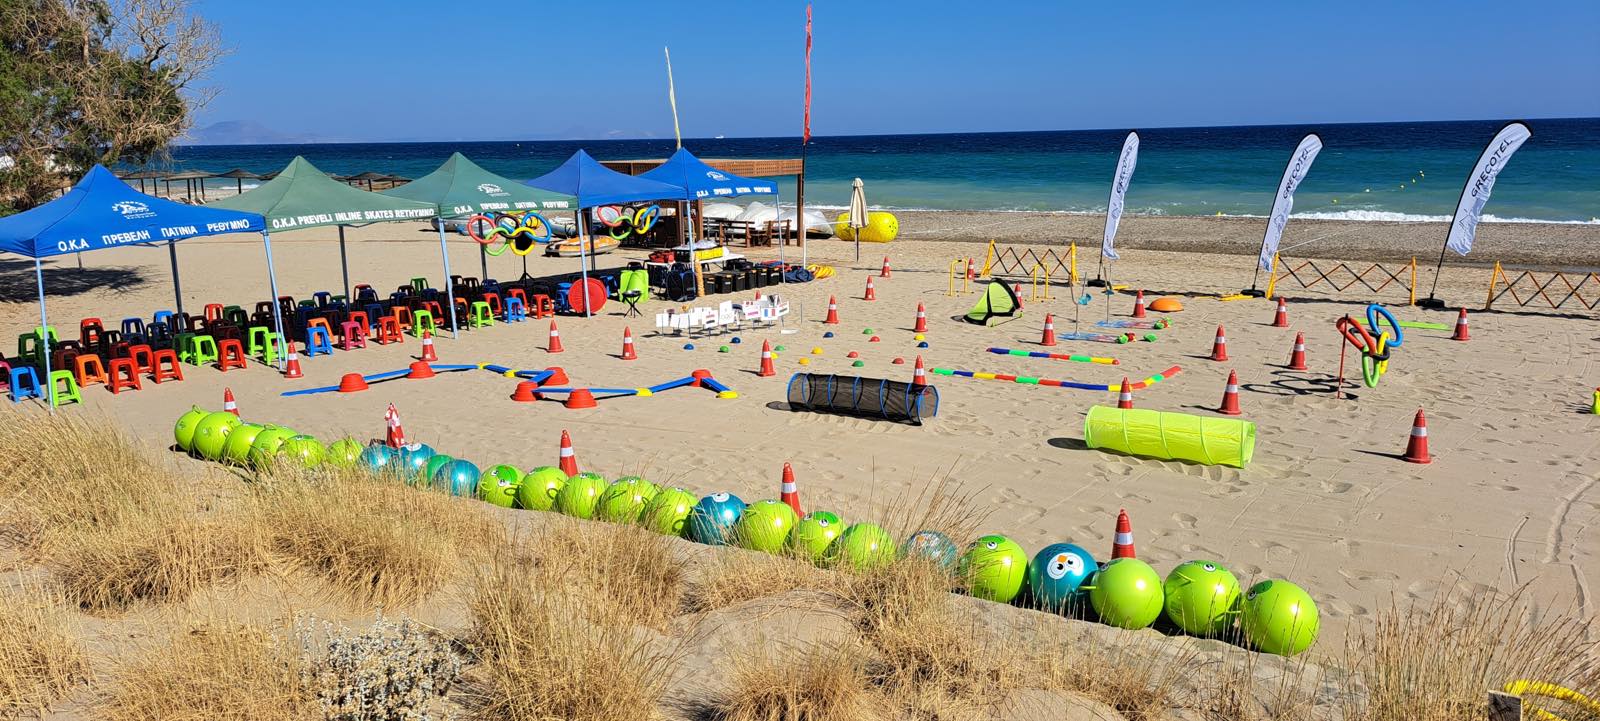 Grecotel Beach Games